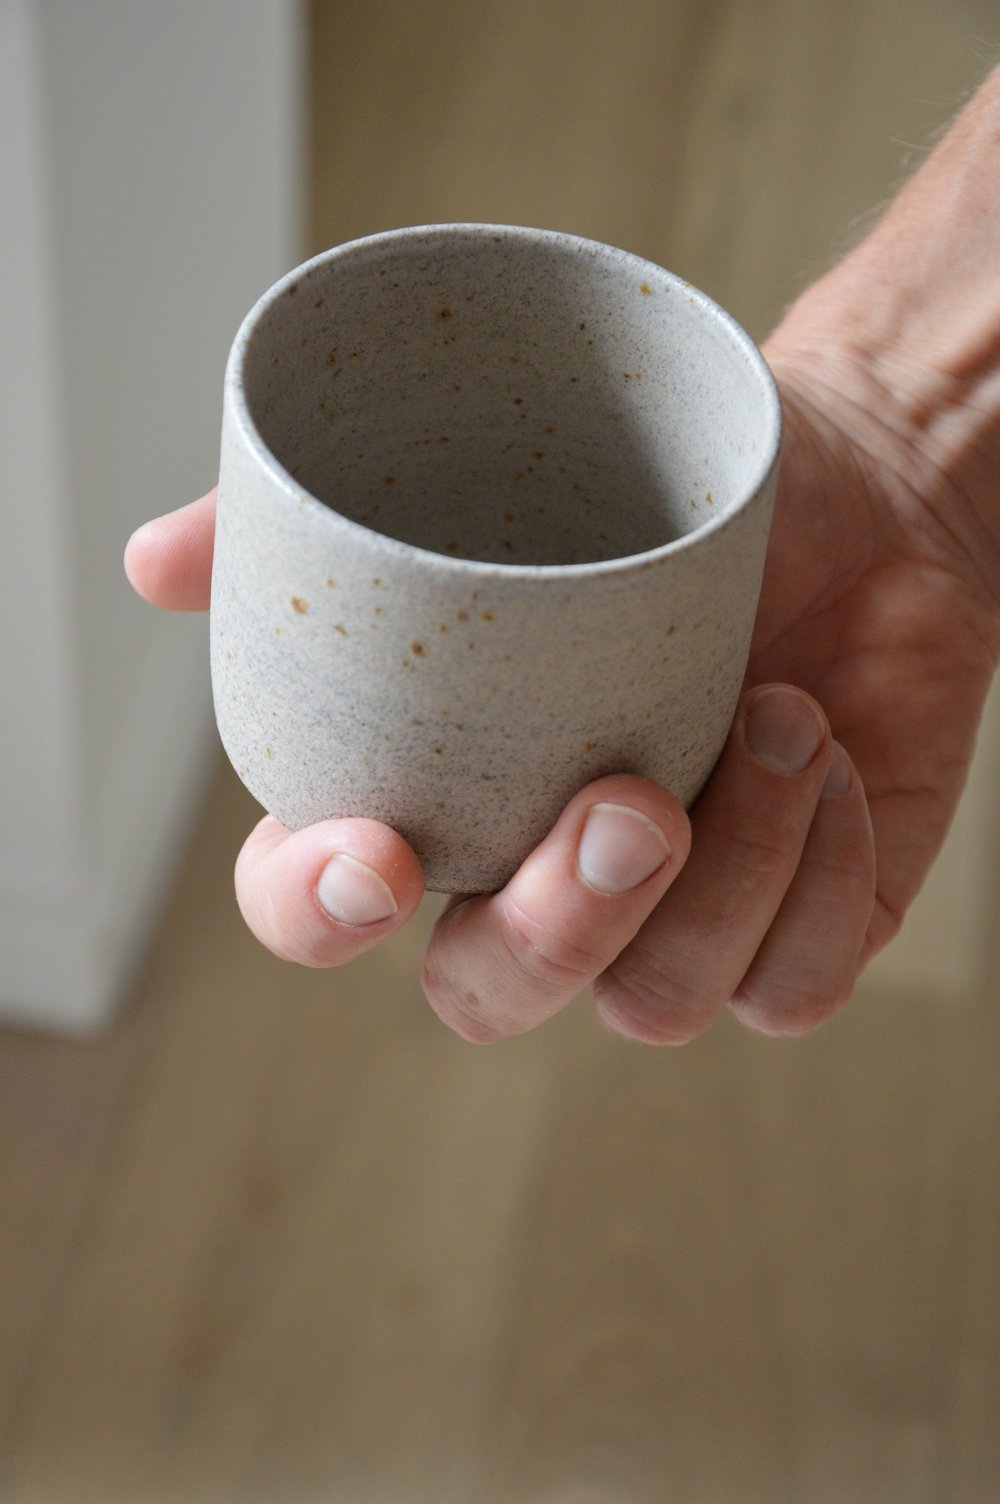 Ceramic Cortado Cup – Porcelain and Stone